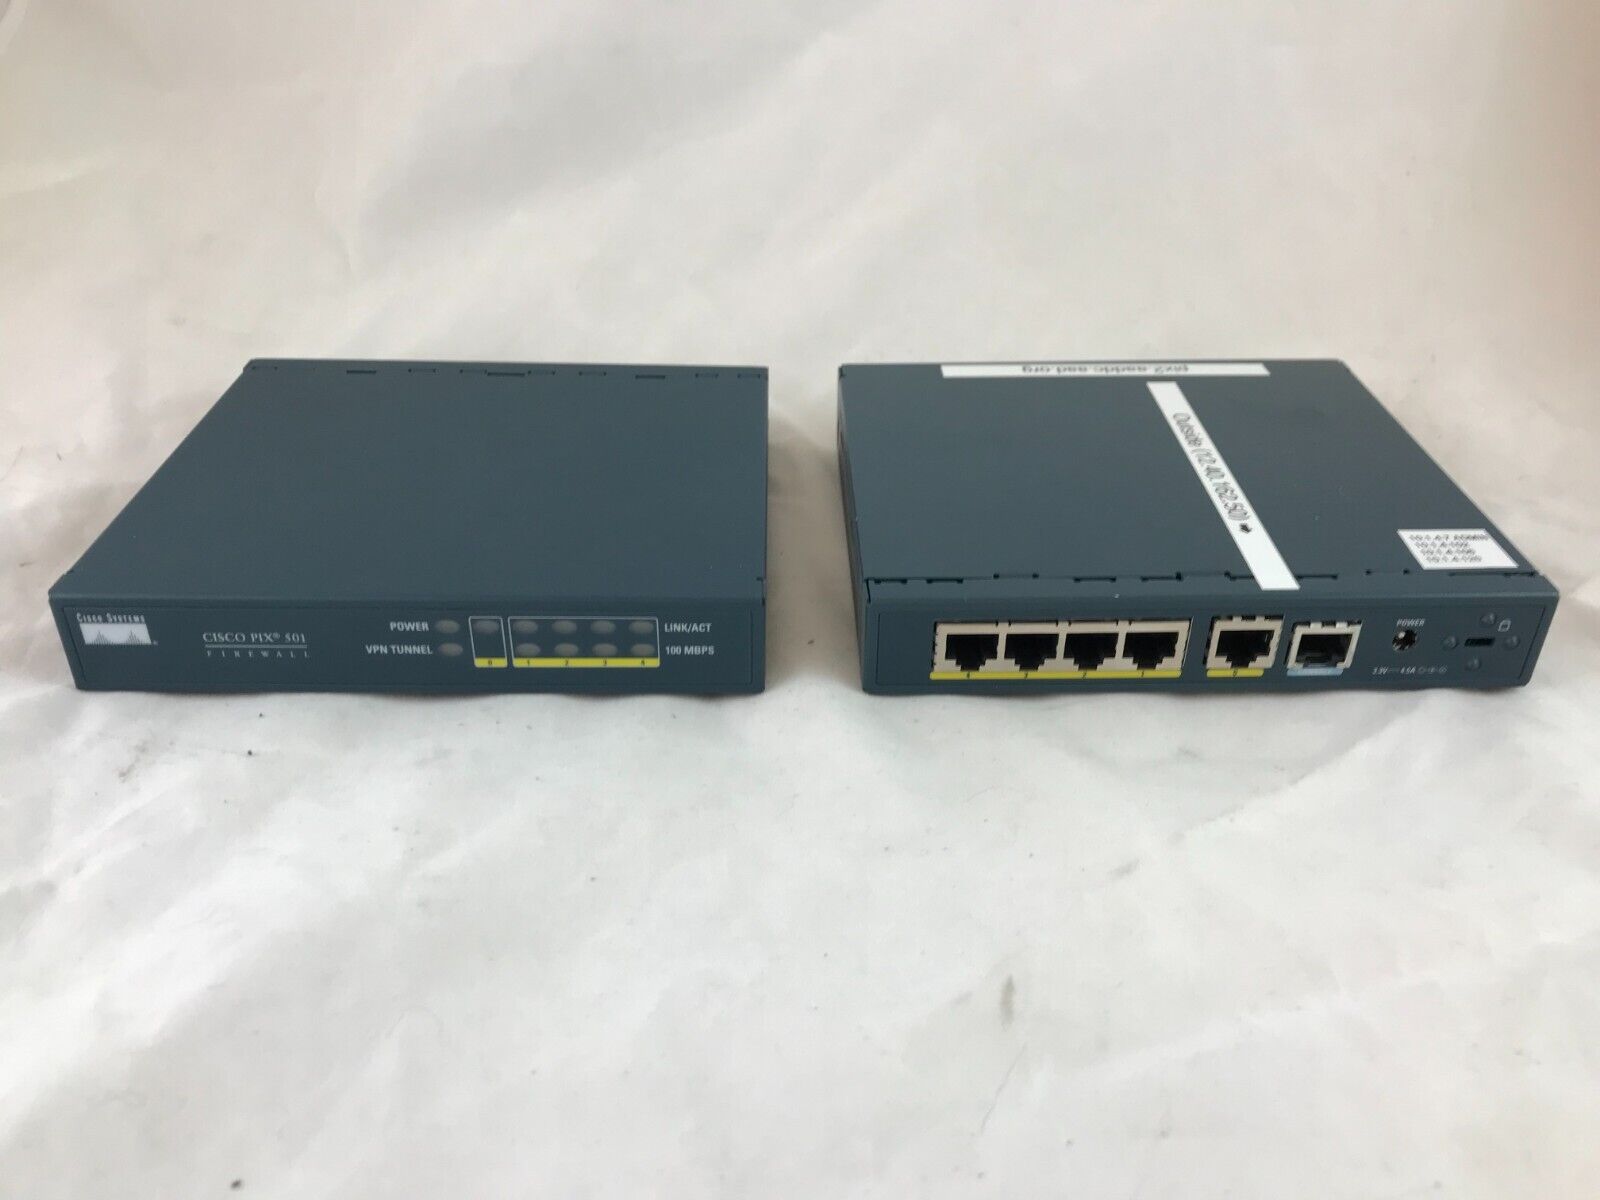 Lot of 2 Cisco PIX 501 4-Port 10/100 LAN Firewall Security 47-10539-01 (2)